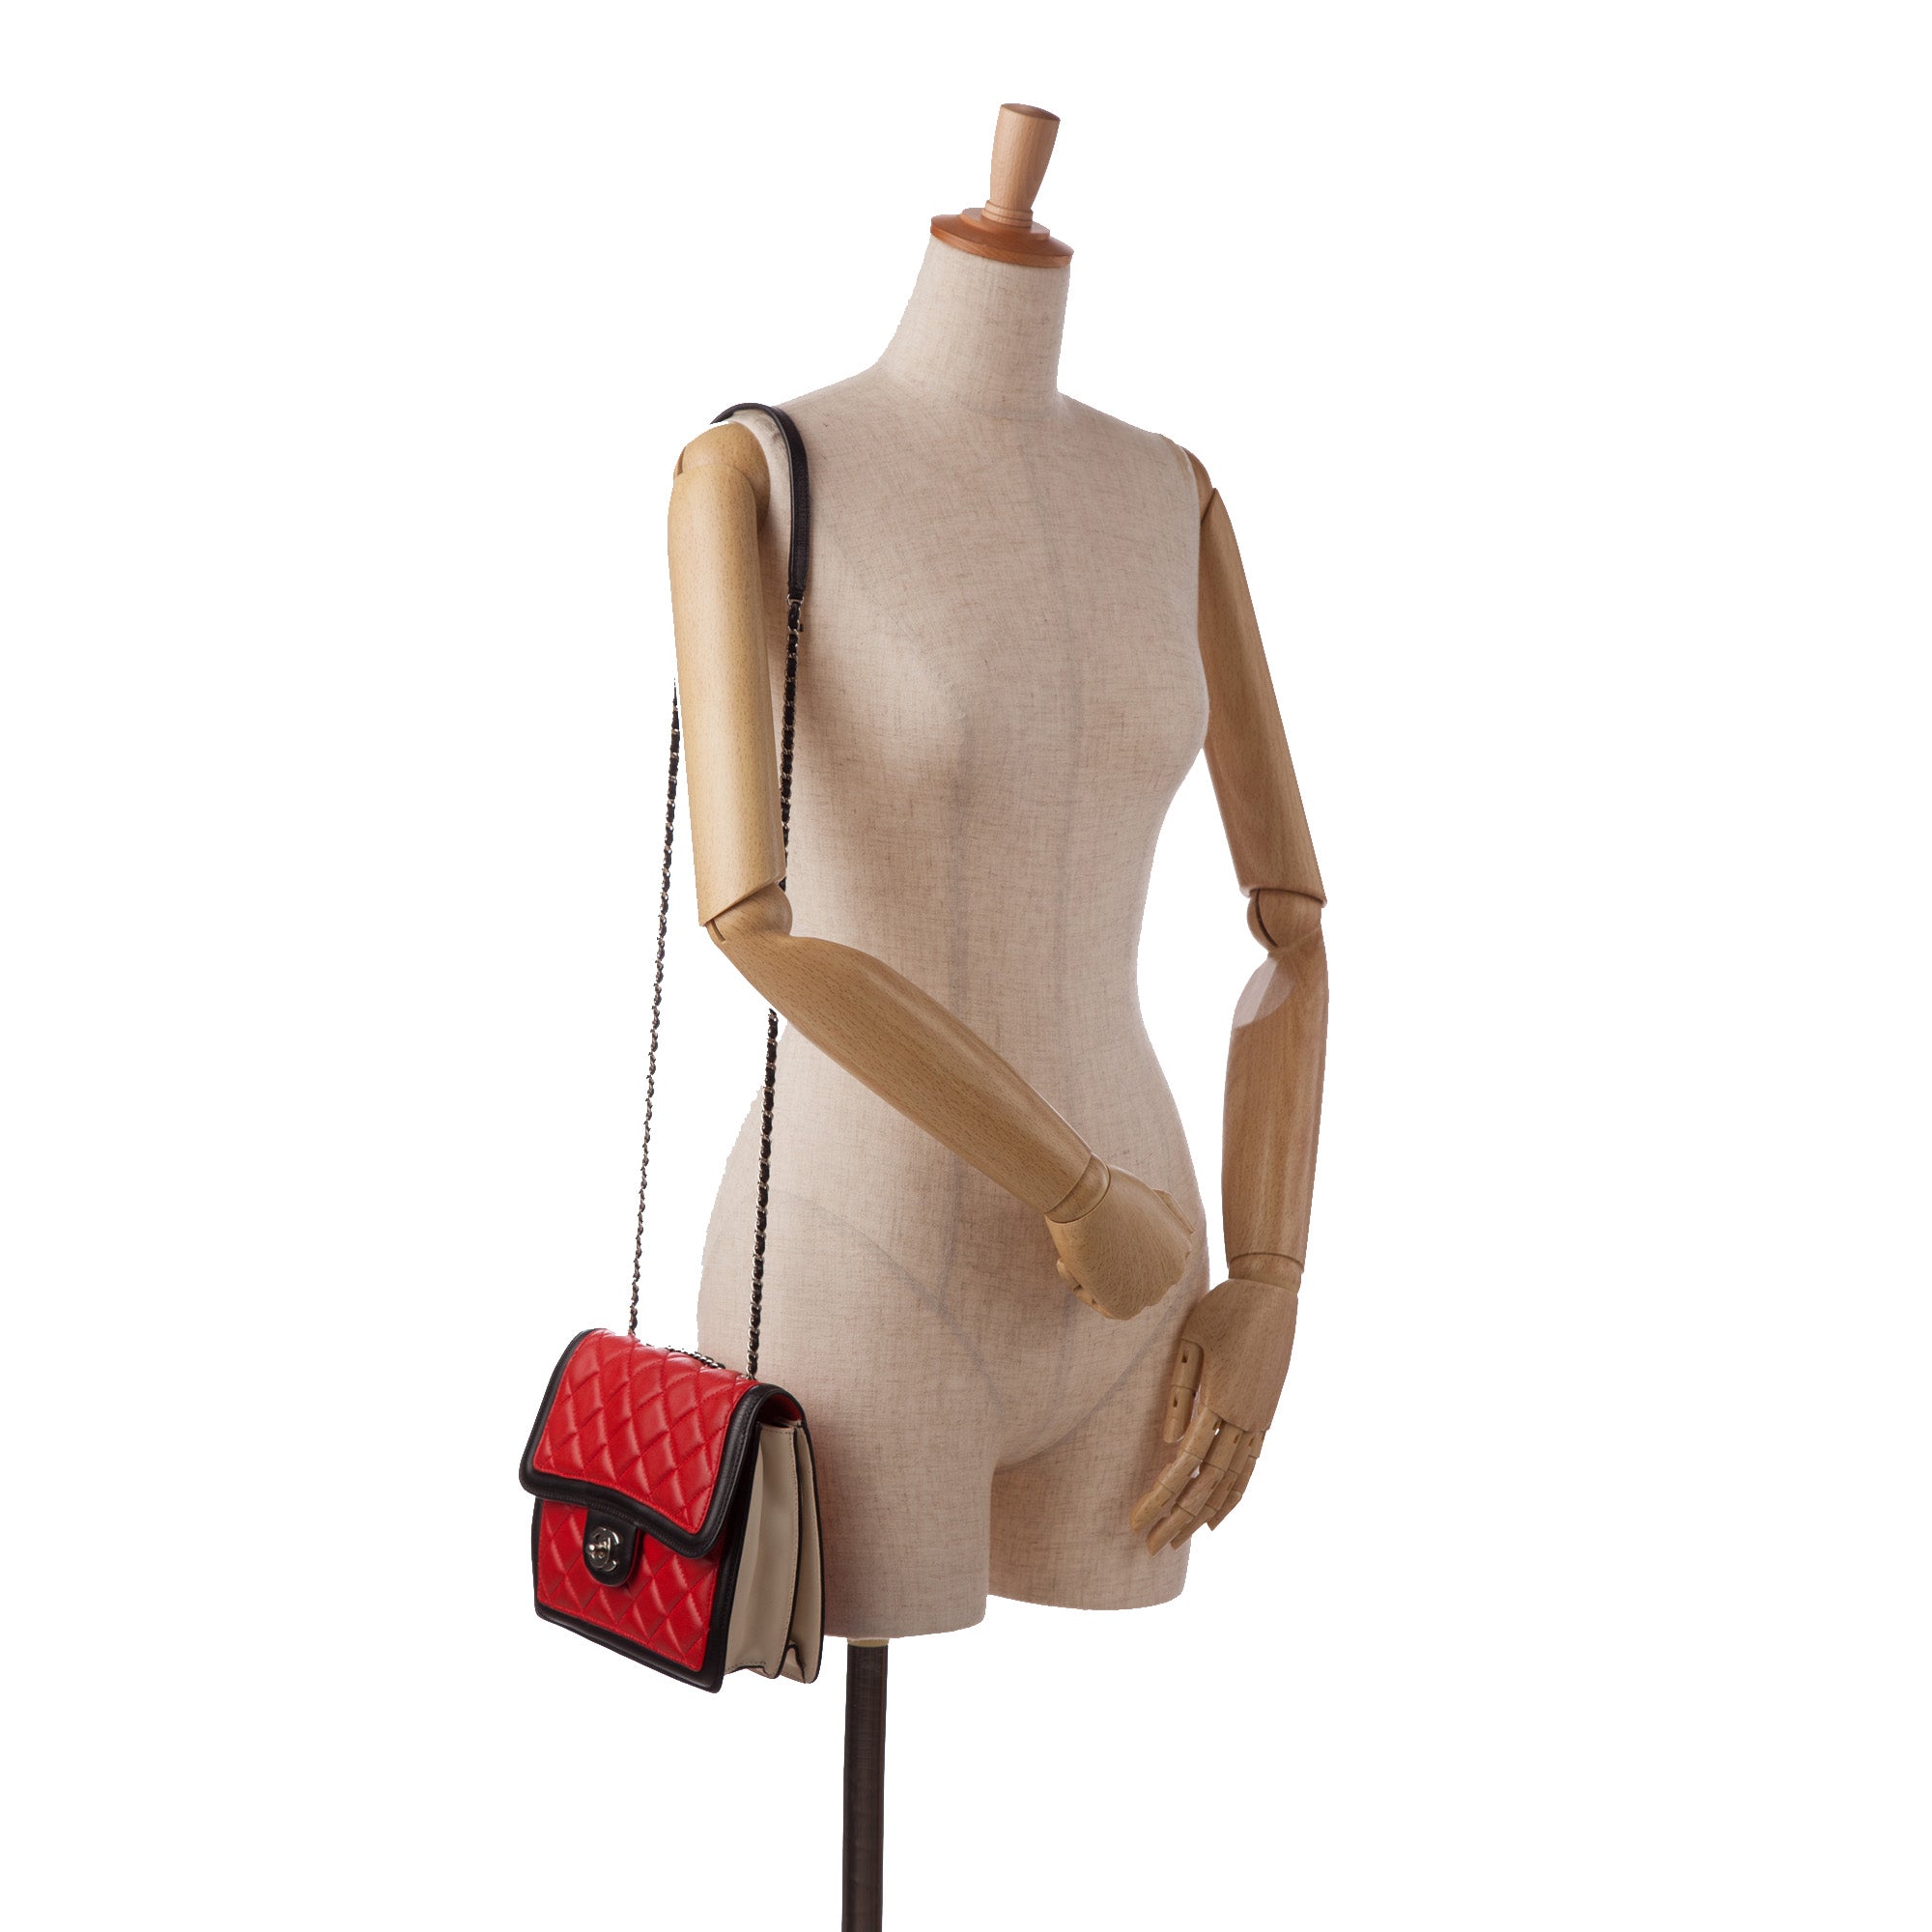 Red Chanel Mini Square Graphic Flap Crossbody Bag – Designer Revival